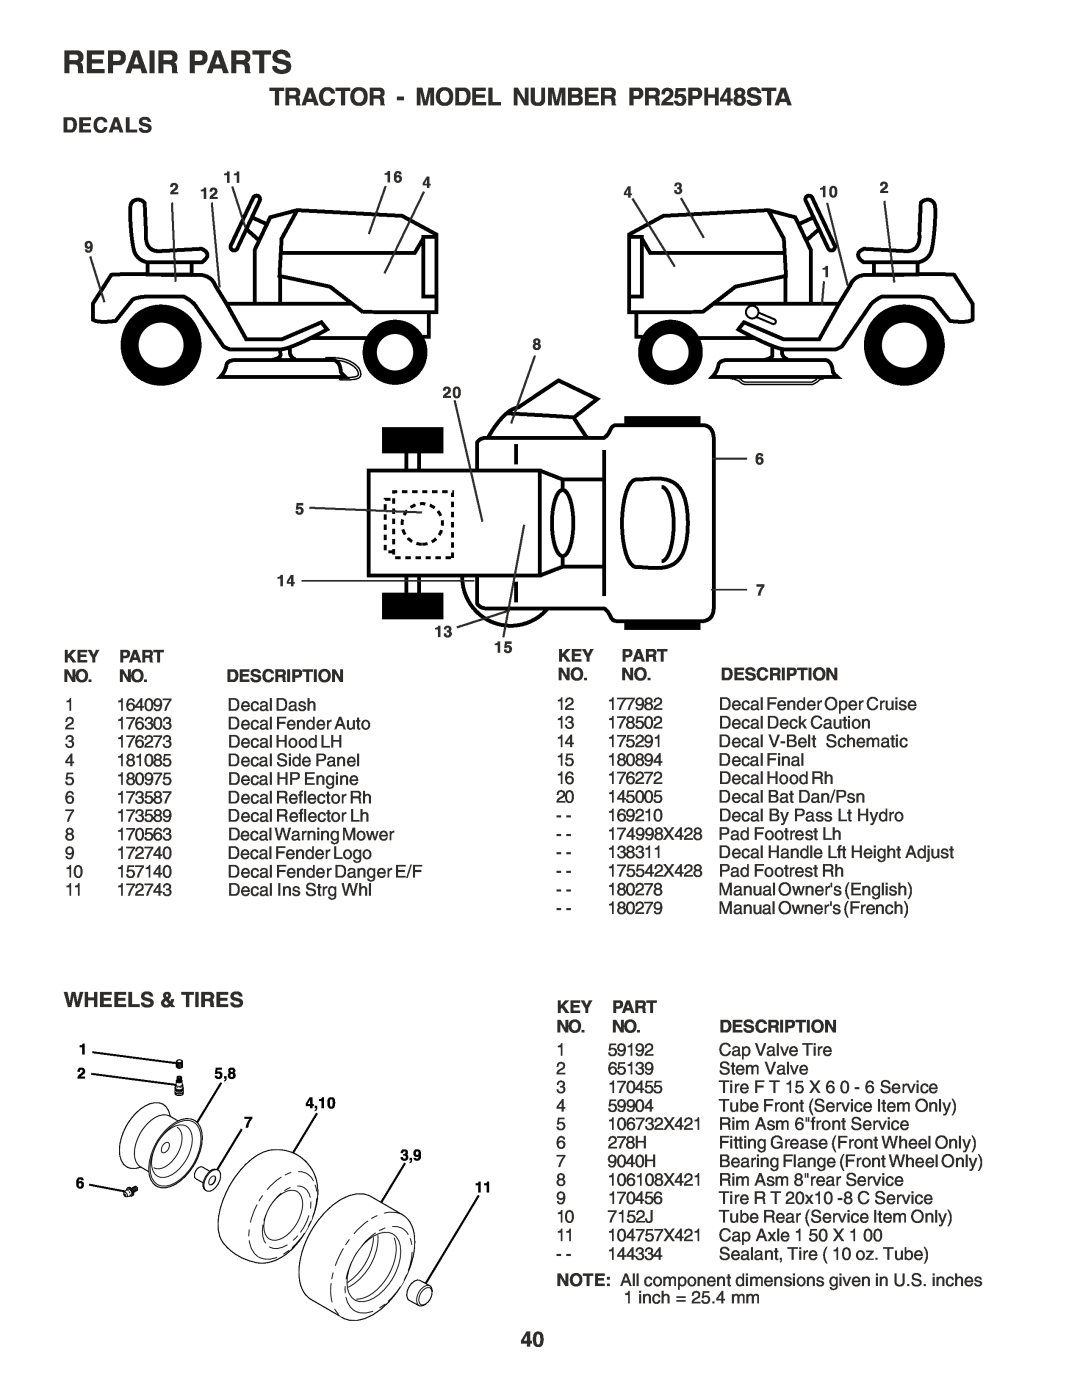 Poulan 180278 owner manual Decals, Wheels & Tires, Repair Parts, TRACTOR - MODEL NUMBER PR25PH48STA, Description 